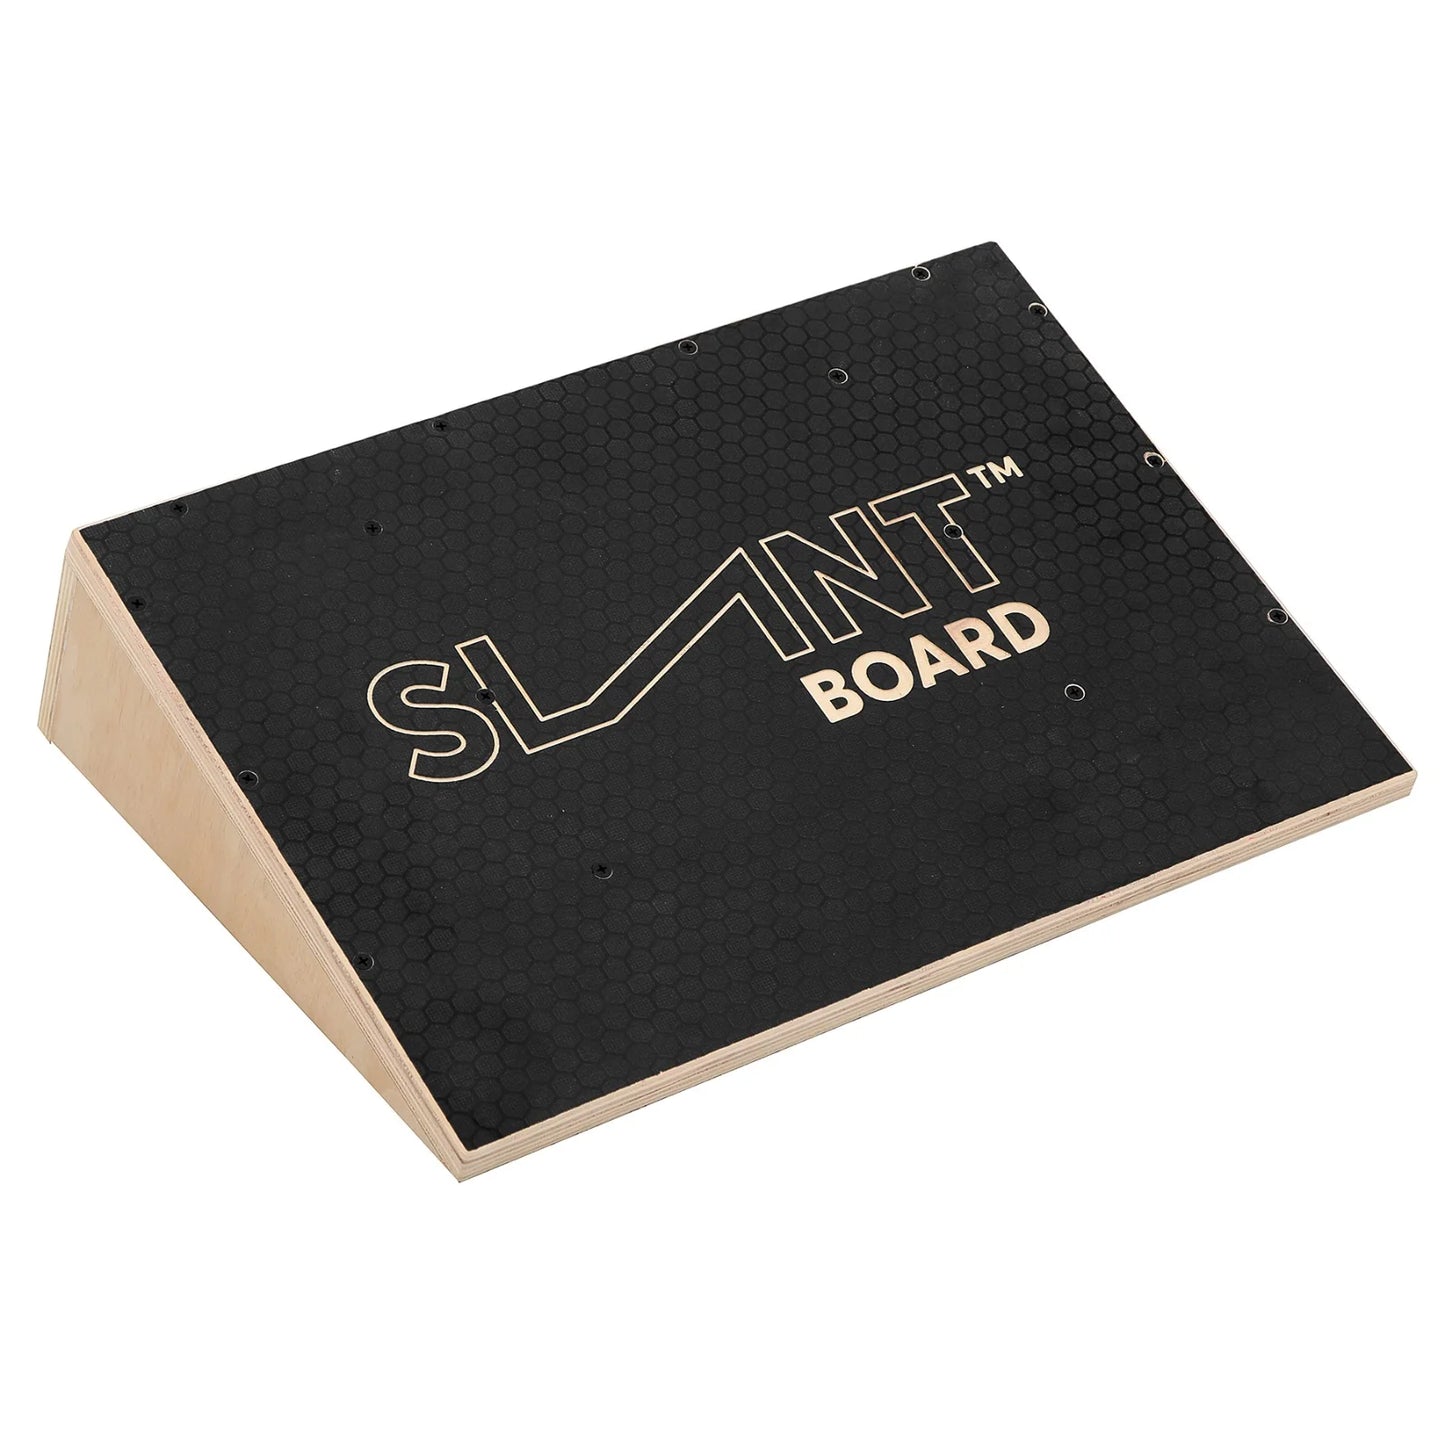 The Slant Board